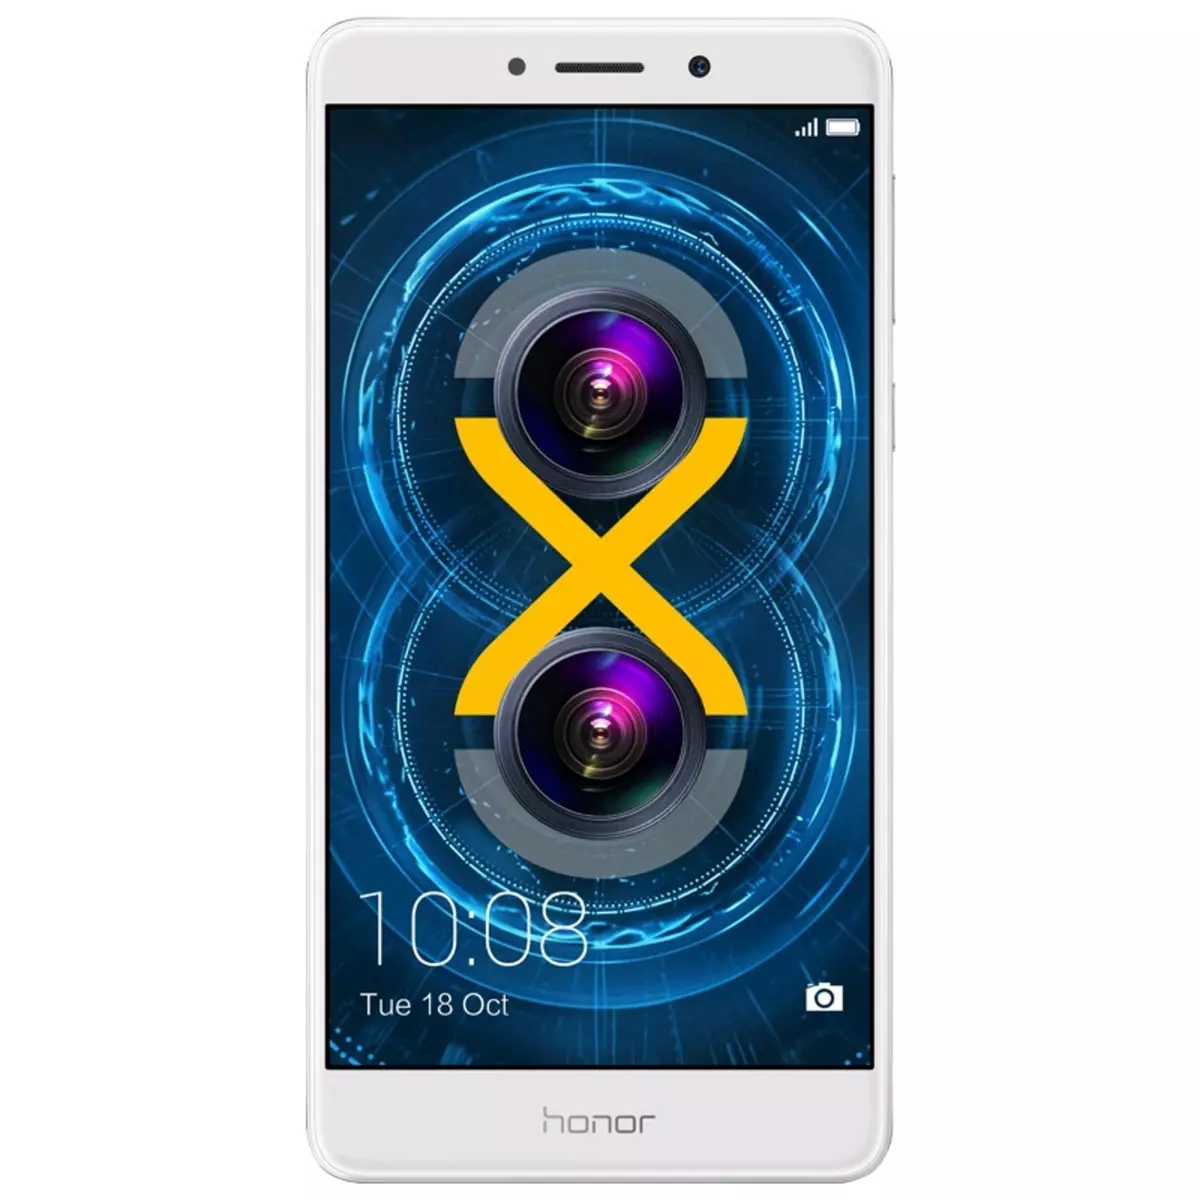 HONOR Smartphone - HONOR 6X Pro - Silver - Double SIM